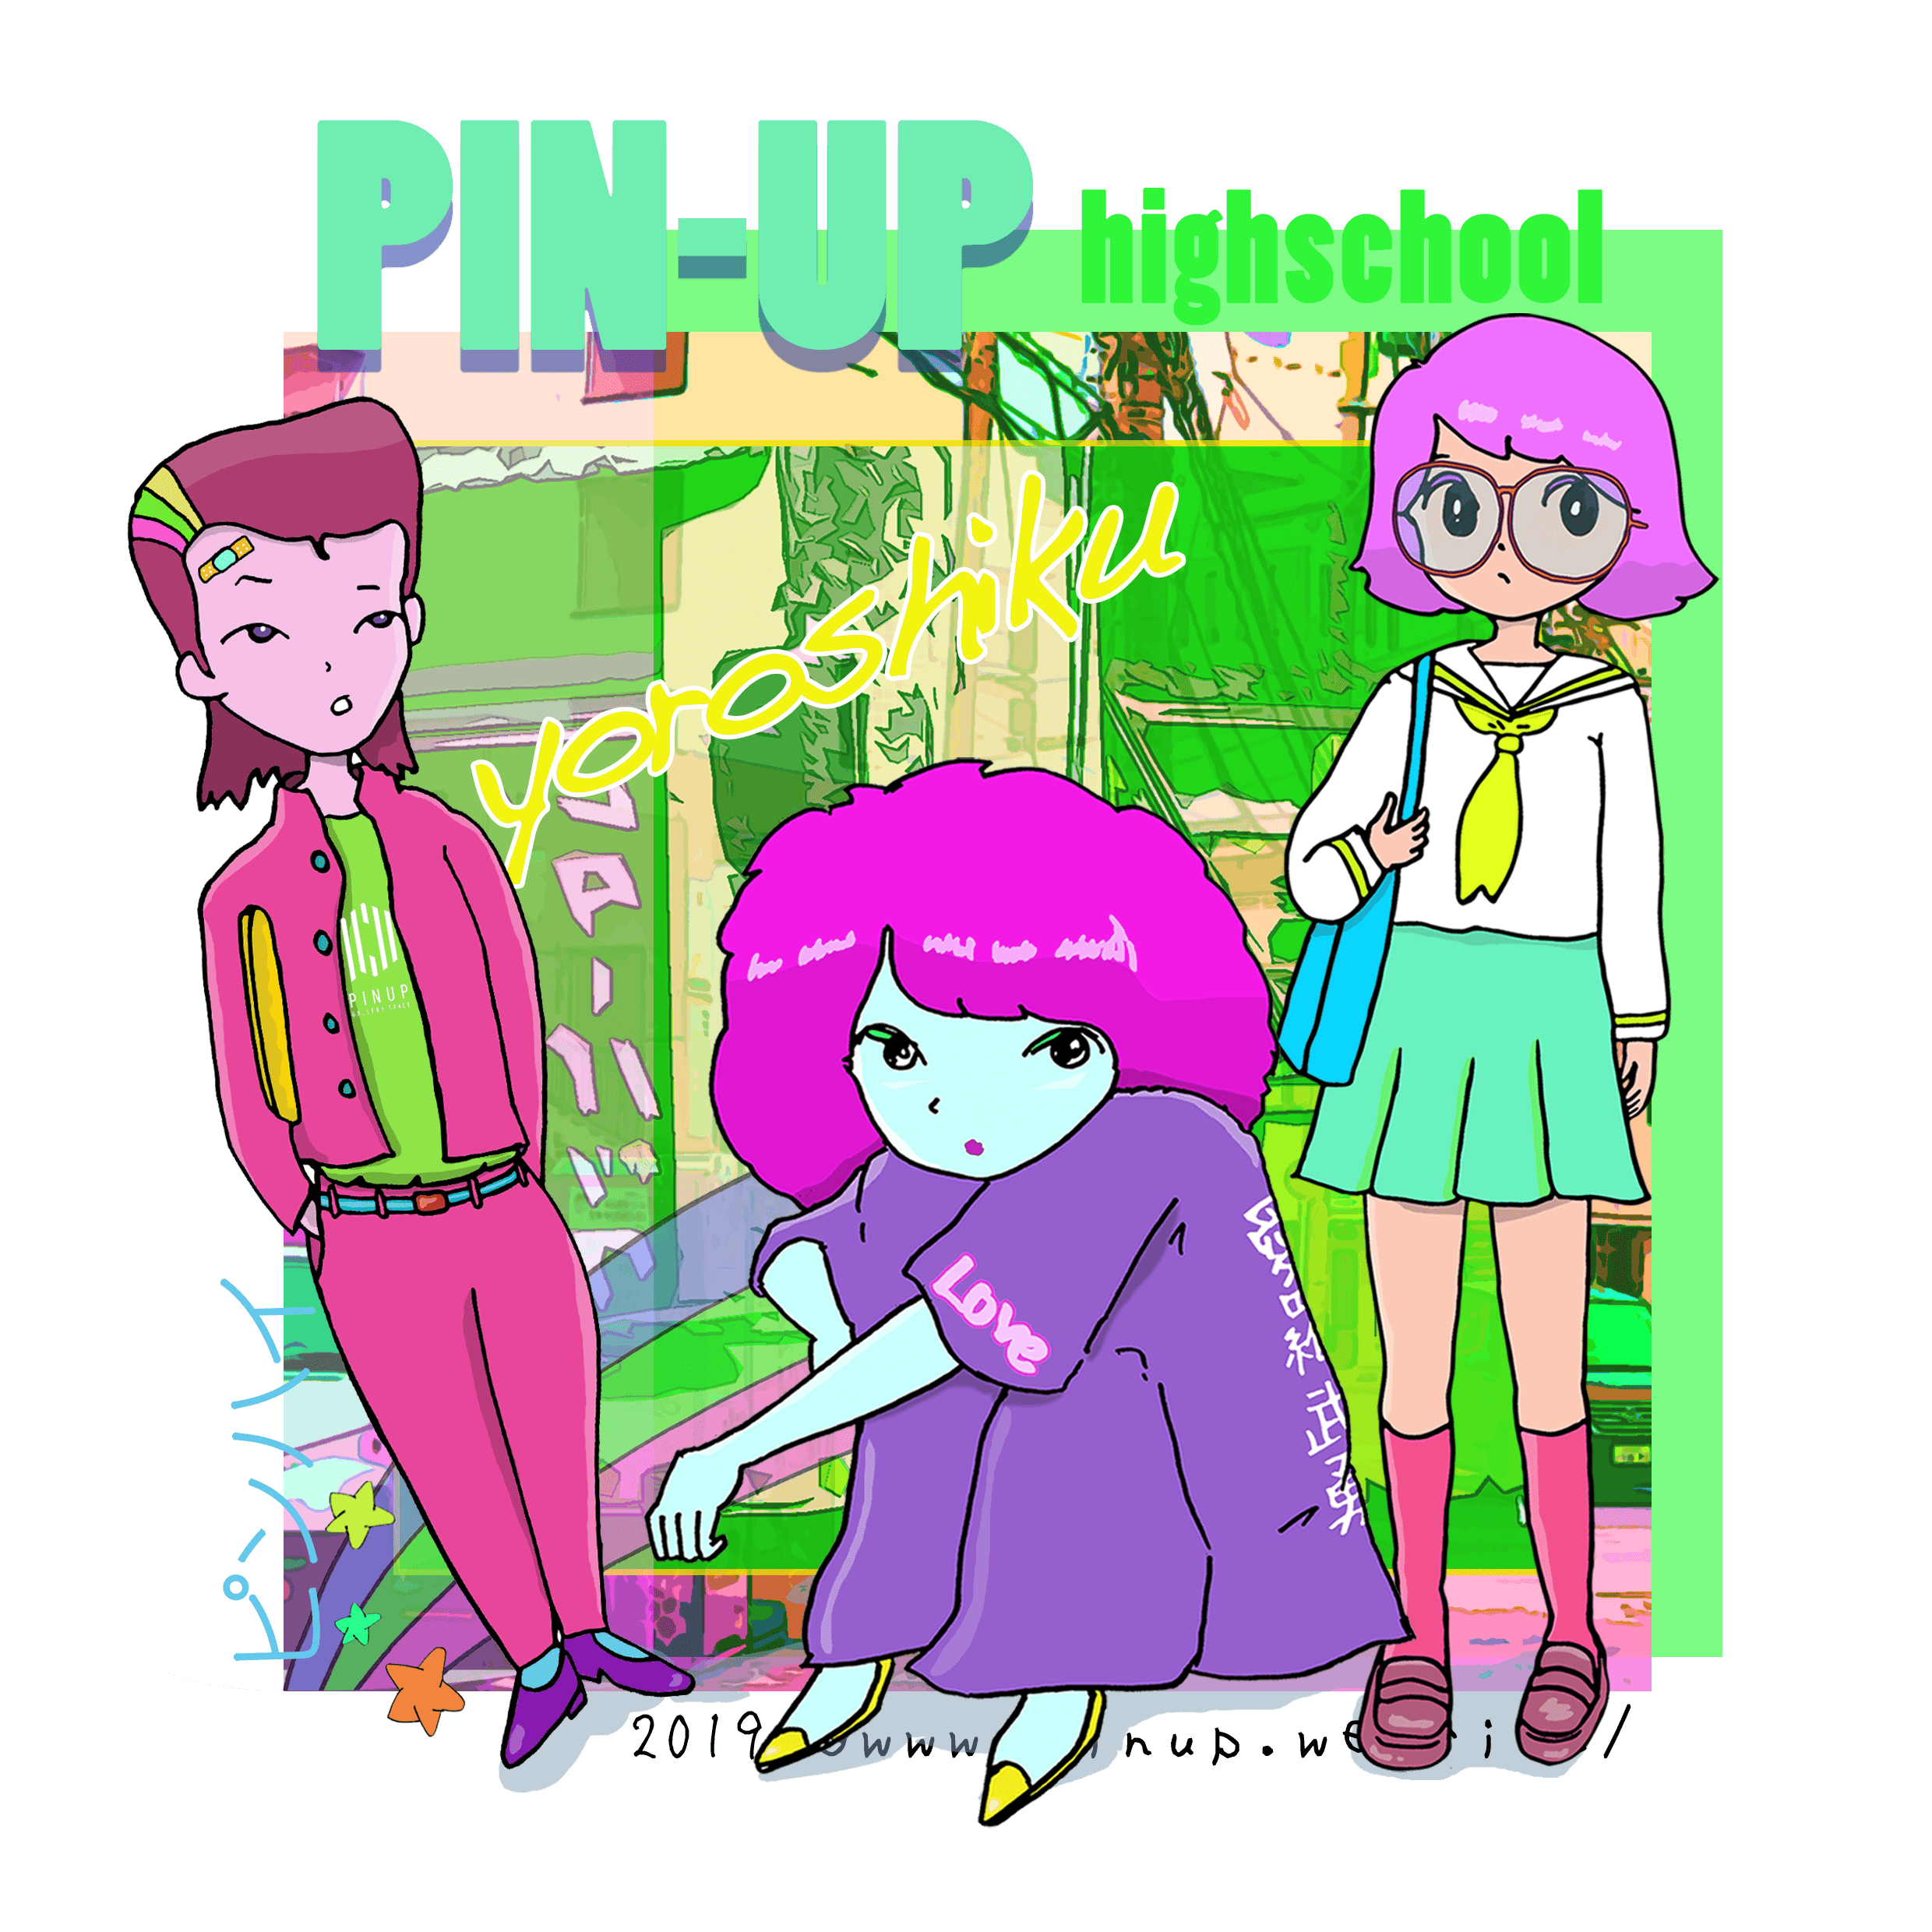 PIN-UP_highschool